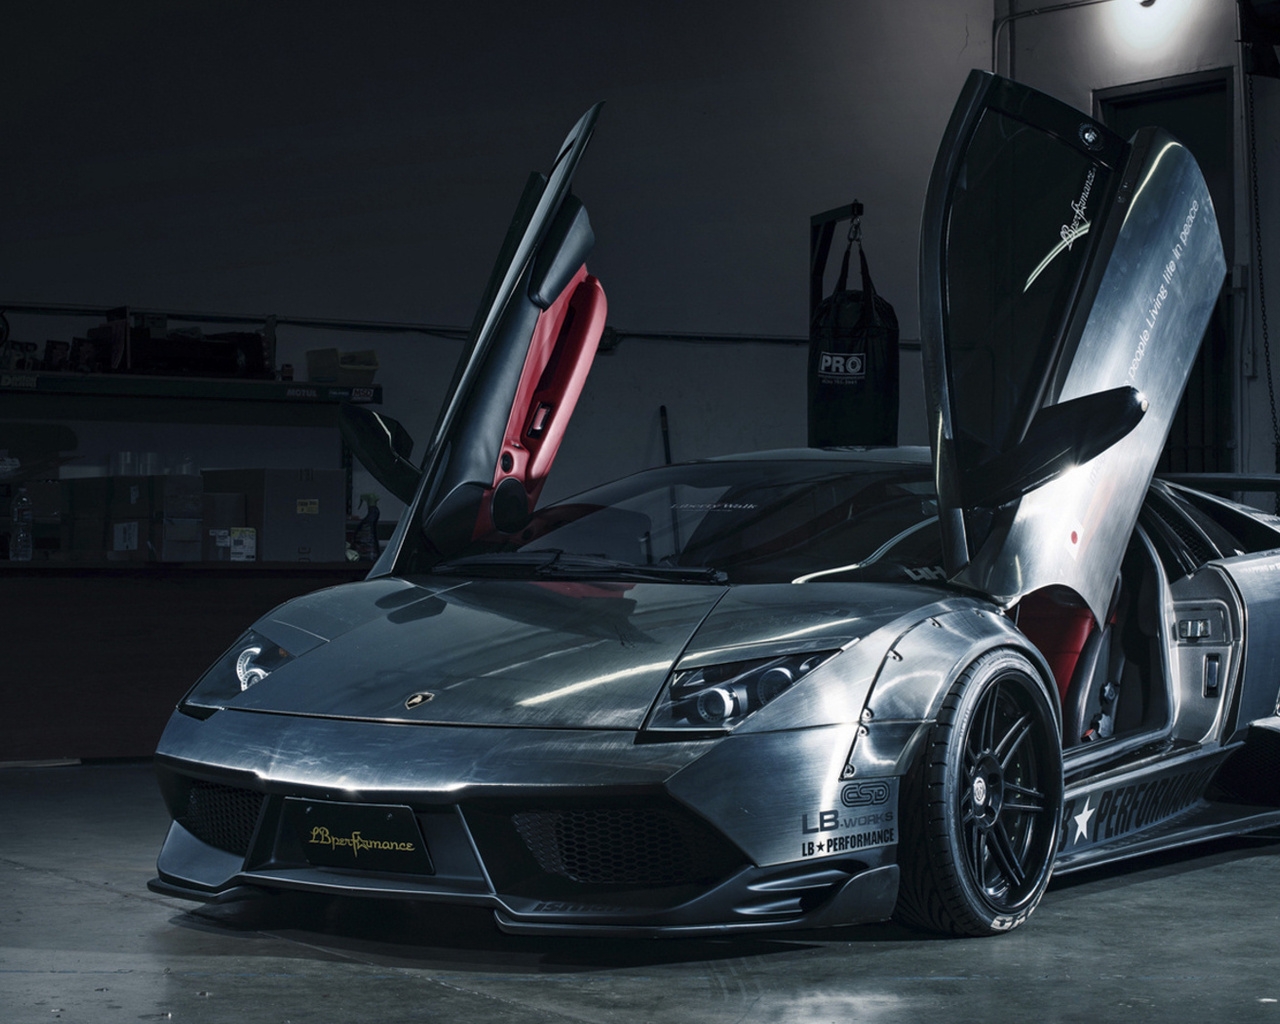 Lamborghini Murcielago LB Performance for 1280 x 1024 resolution